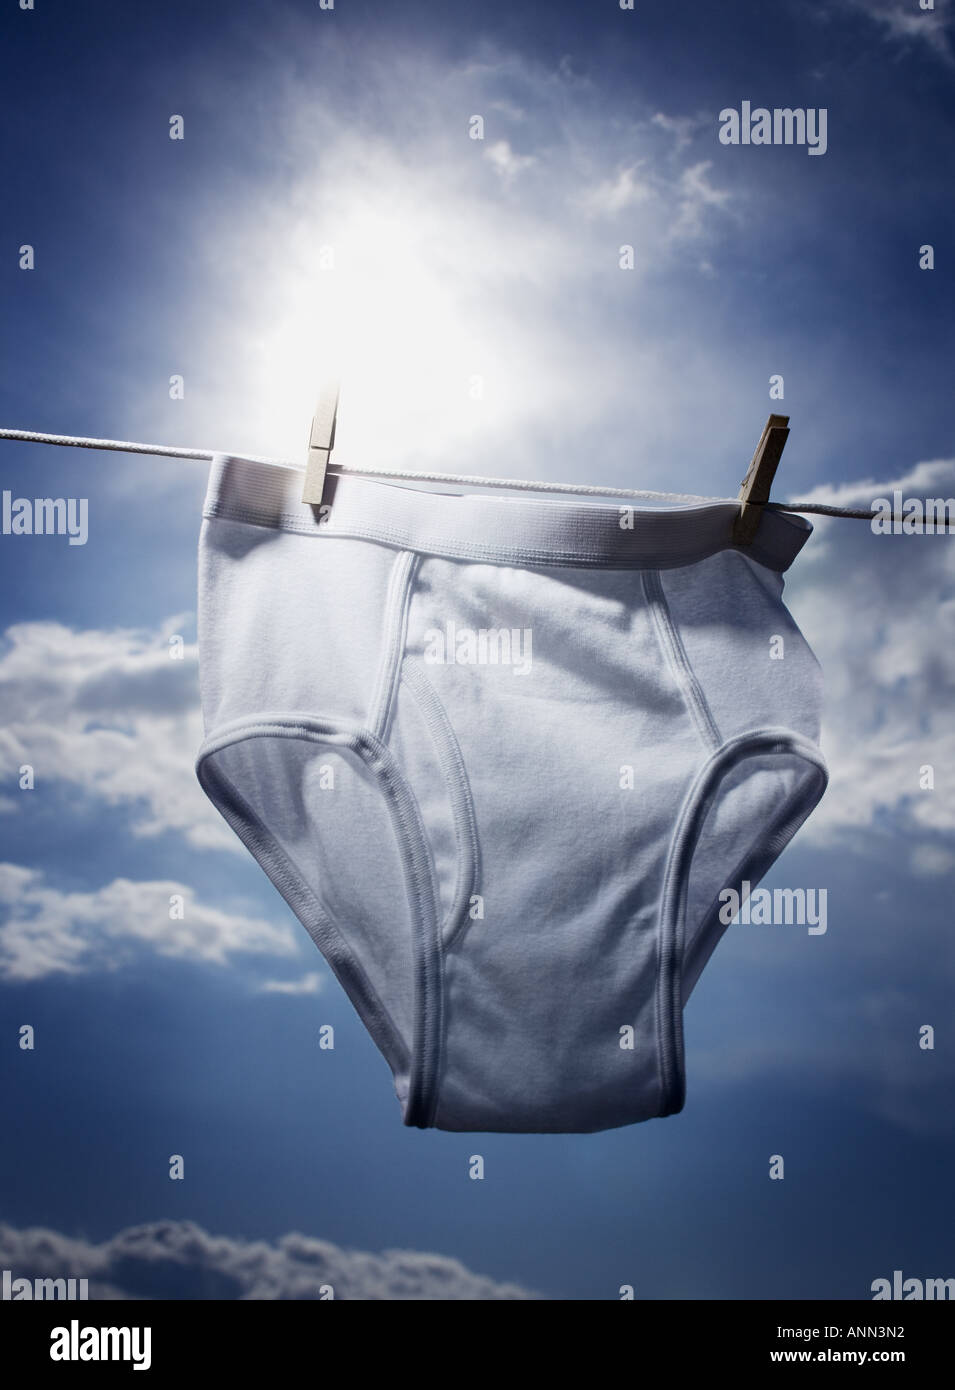 https://c8.alamy.com/comp/ANN3N2/close-up-of-a-mens-underwear-hanging-on-a-clothesline-ANN3N2.jpg